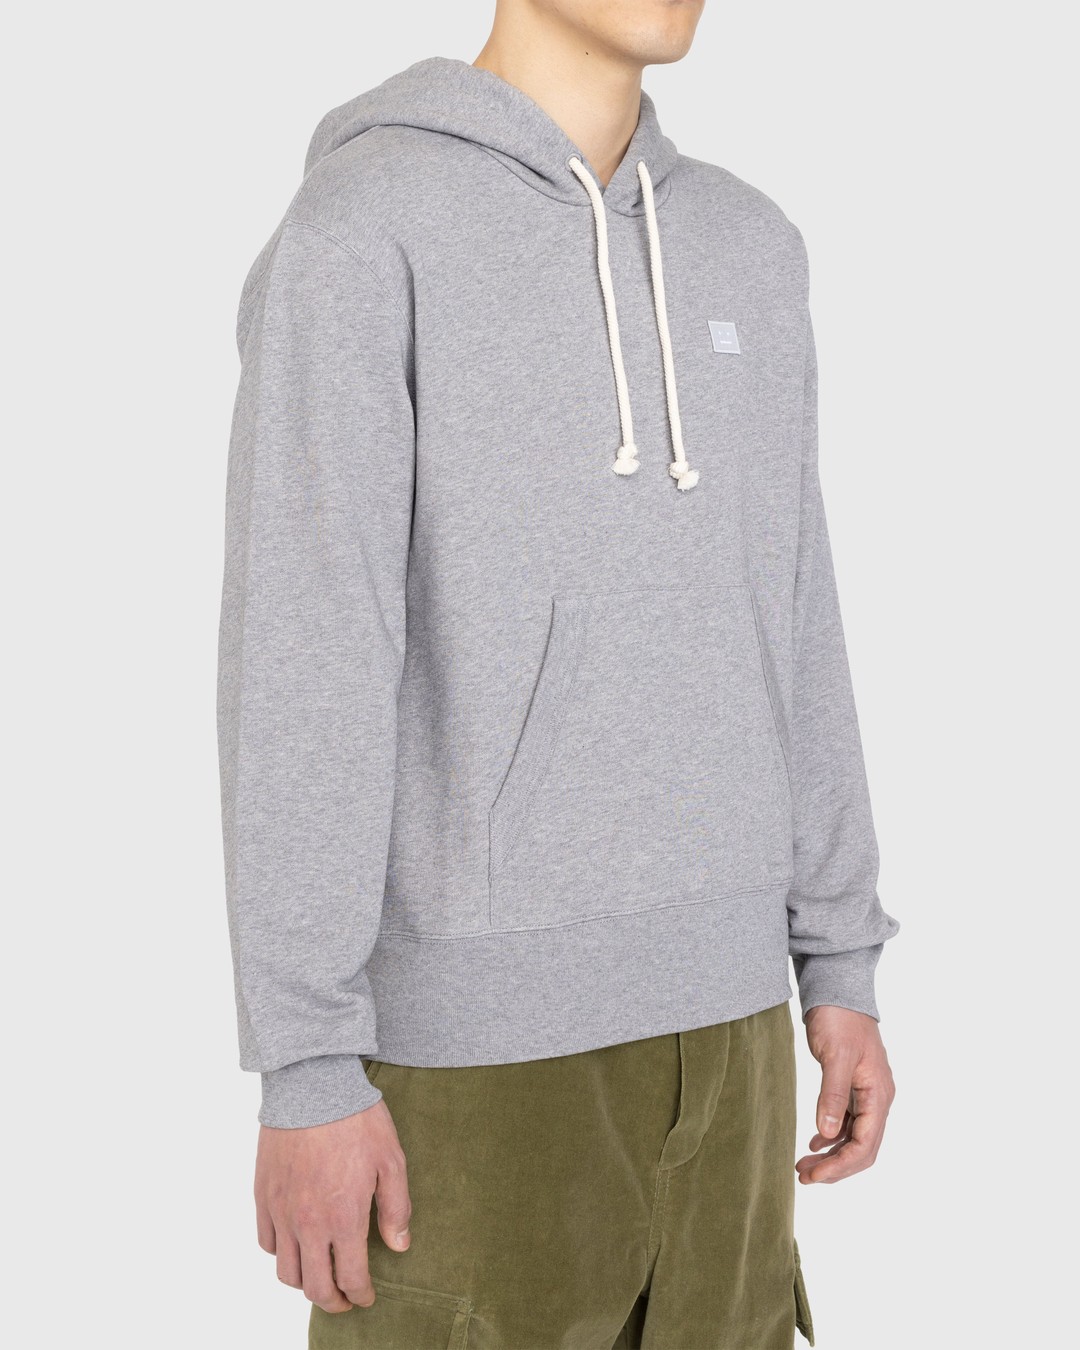 Acne Studios – Organic Cotton Hooded Sweatshirt Grey - Hoodies - Grey - Image 3